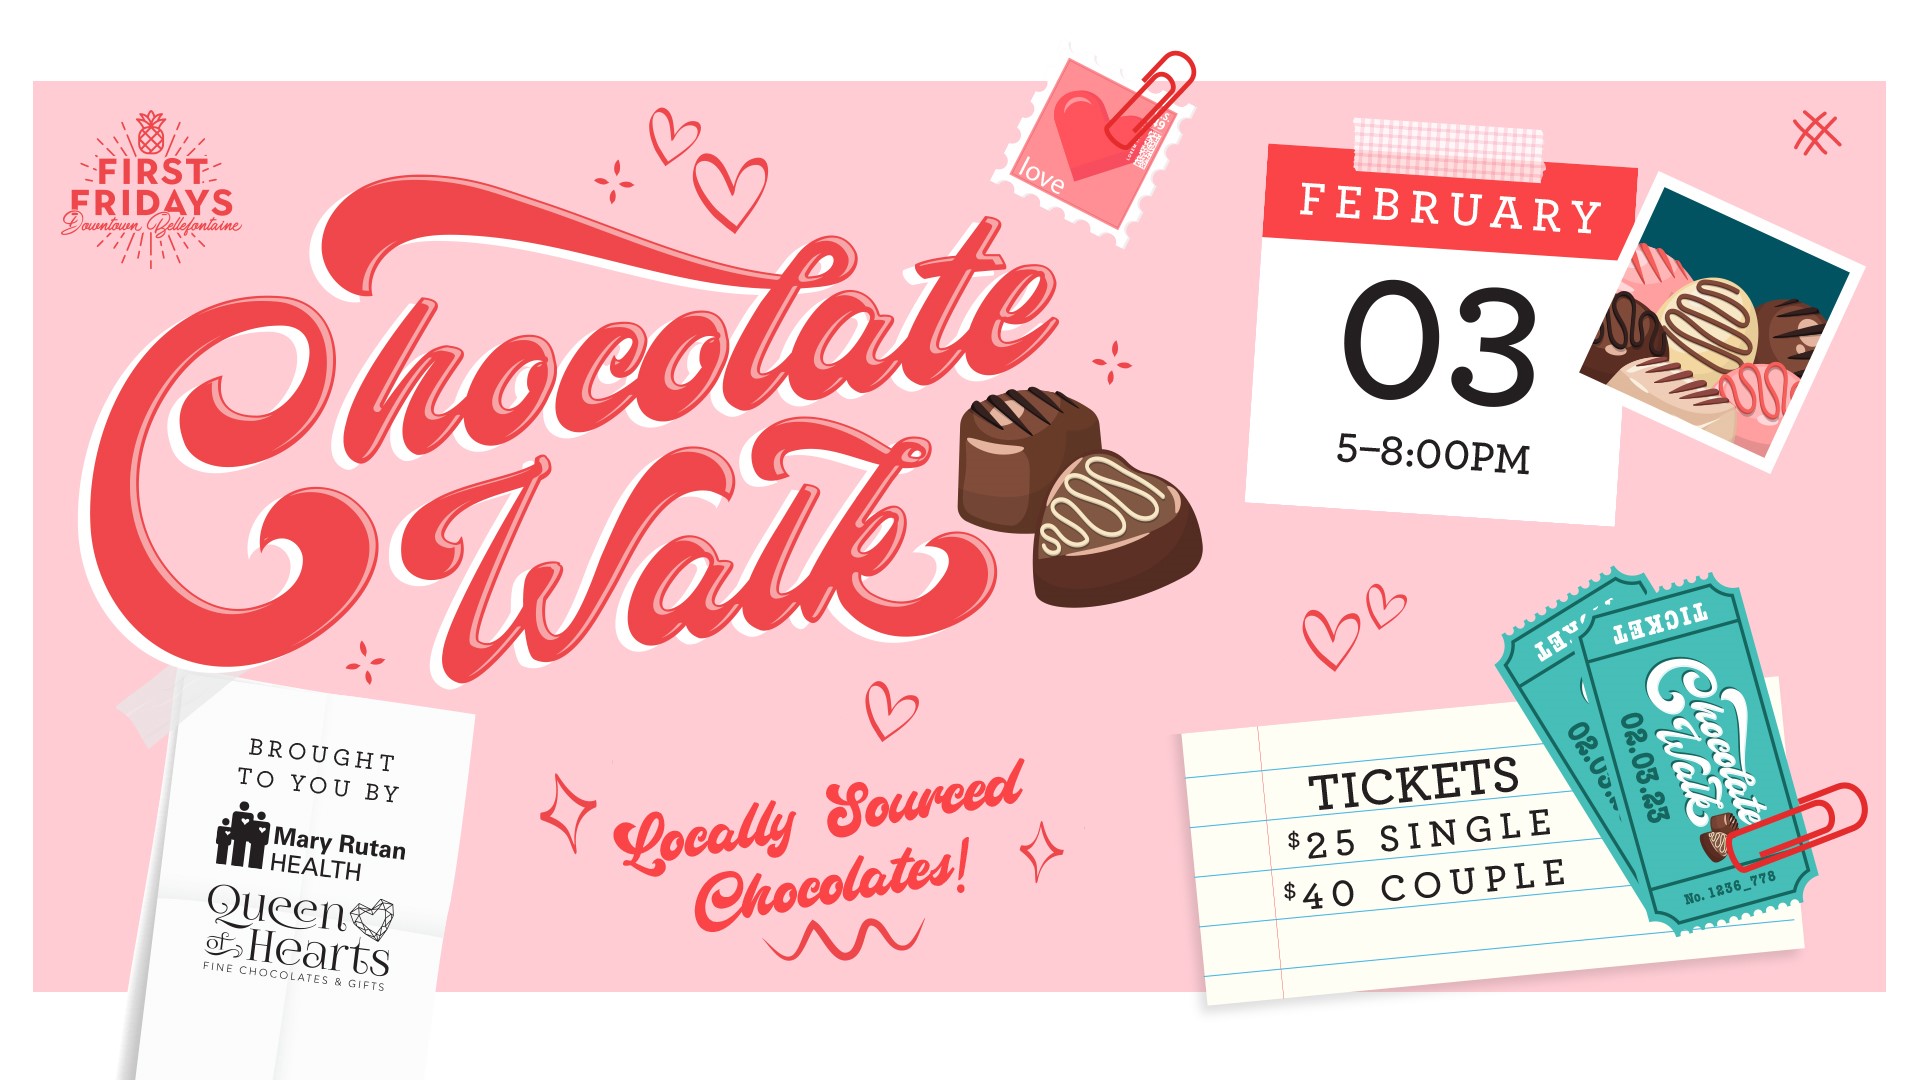 February Forecast: Chocolate for Everyone!